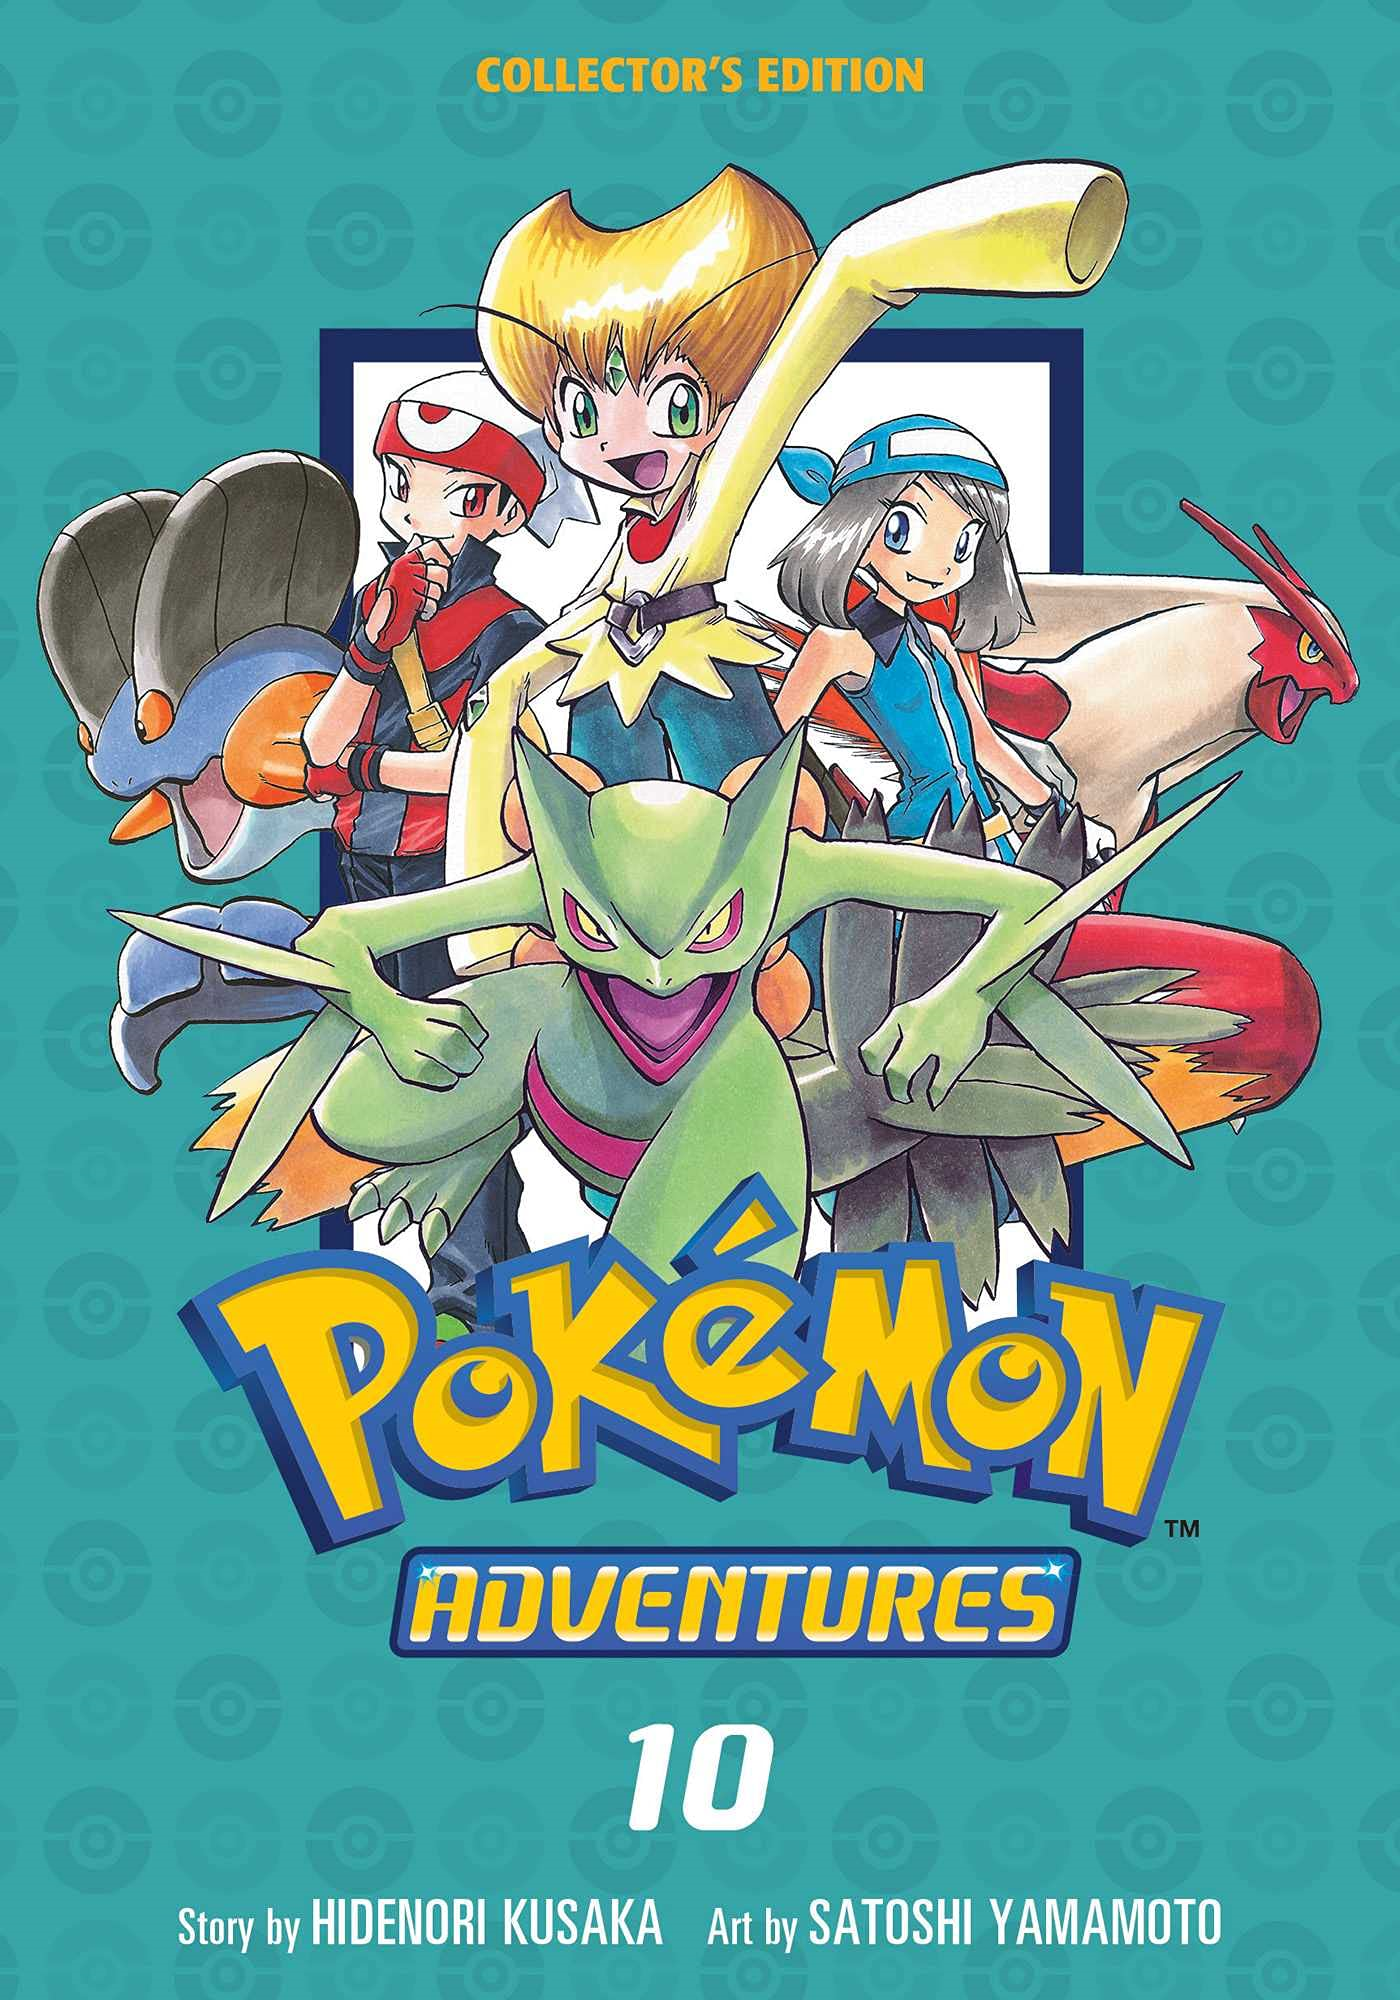 Archie (Adventures), Pokémon Wiki